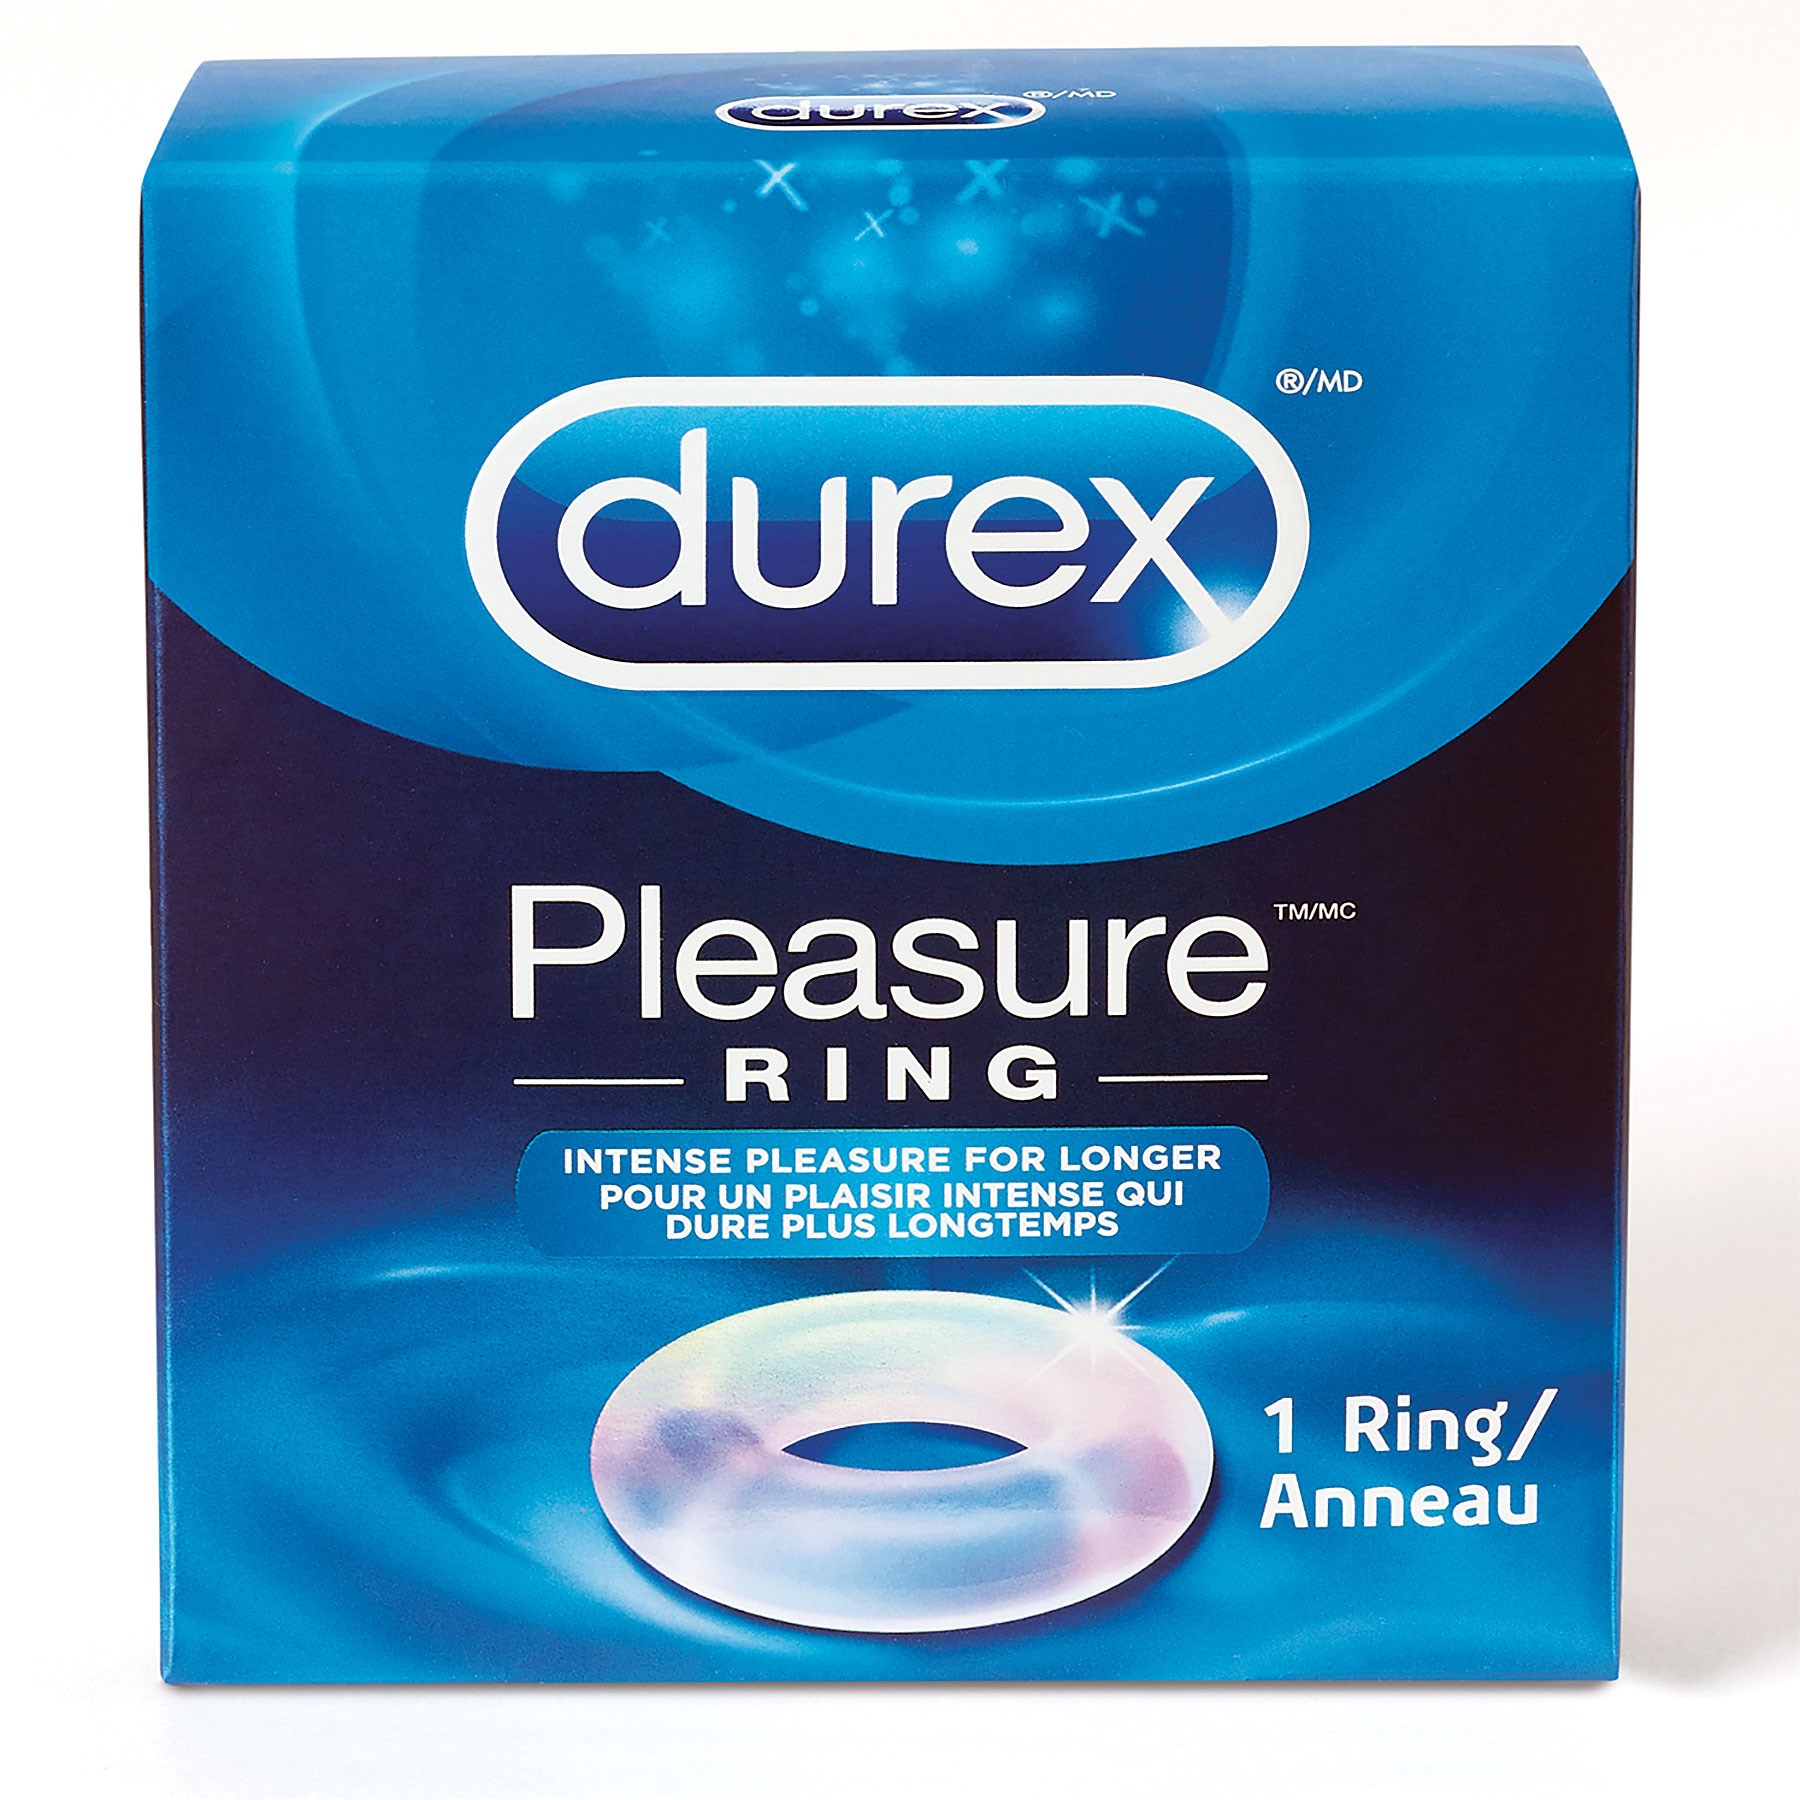 Durex Pleasure Ring box only